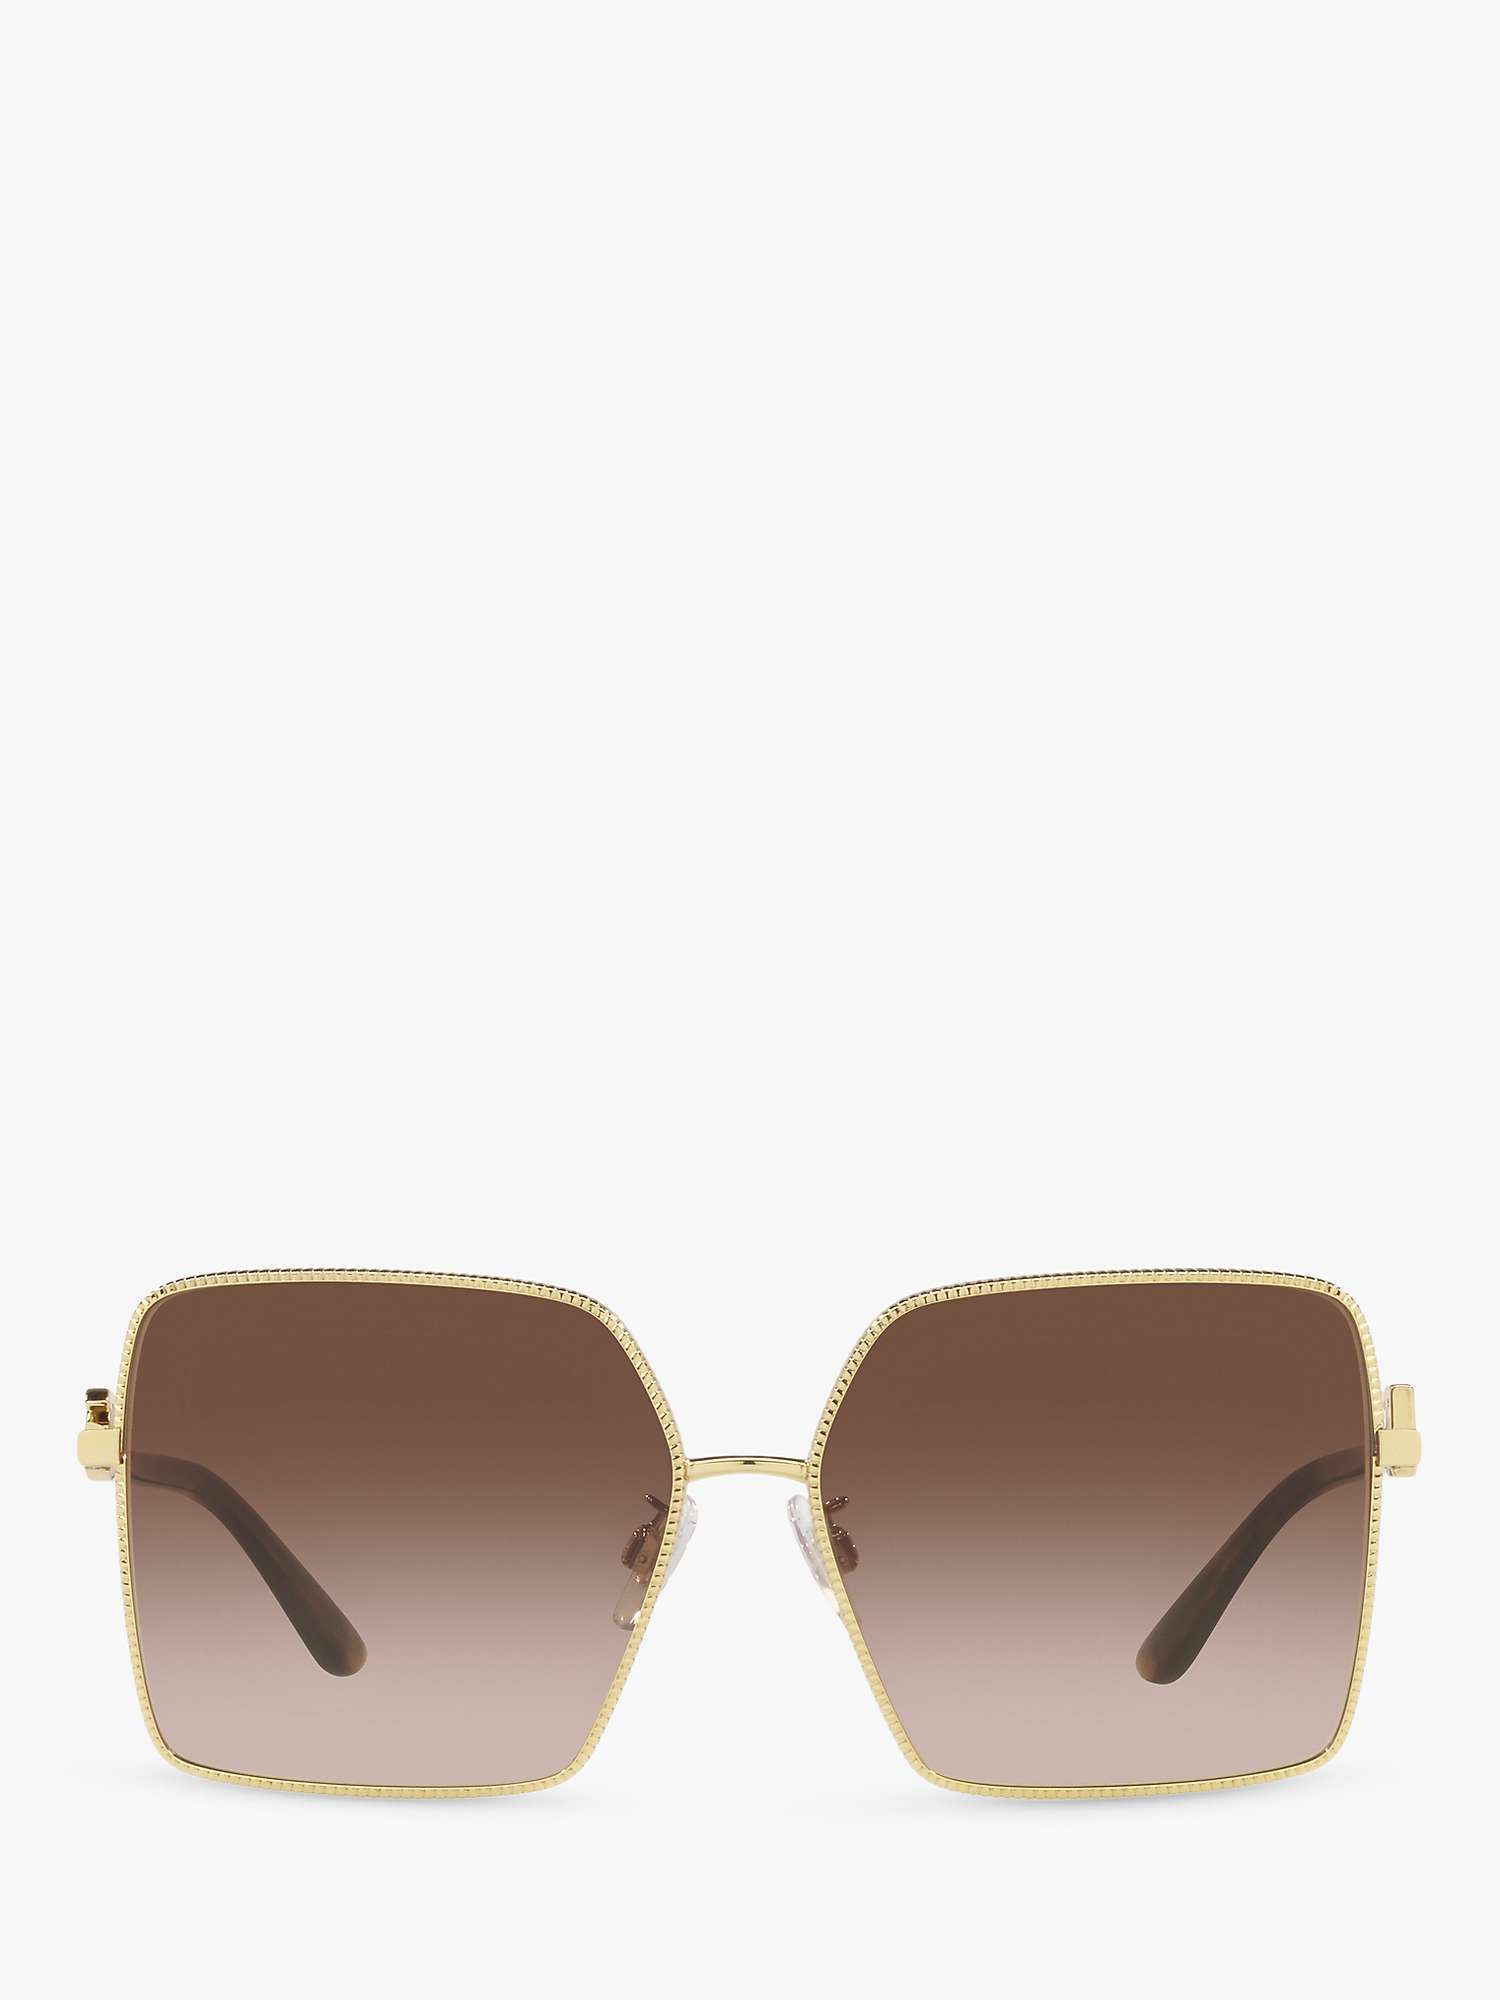 Buy Dolce & Gabbana DG227902 Women's Square Sunglasses, Gold Online at johnlewis.com